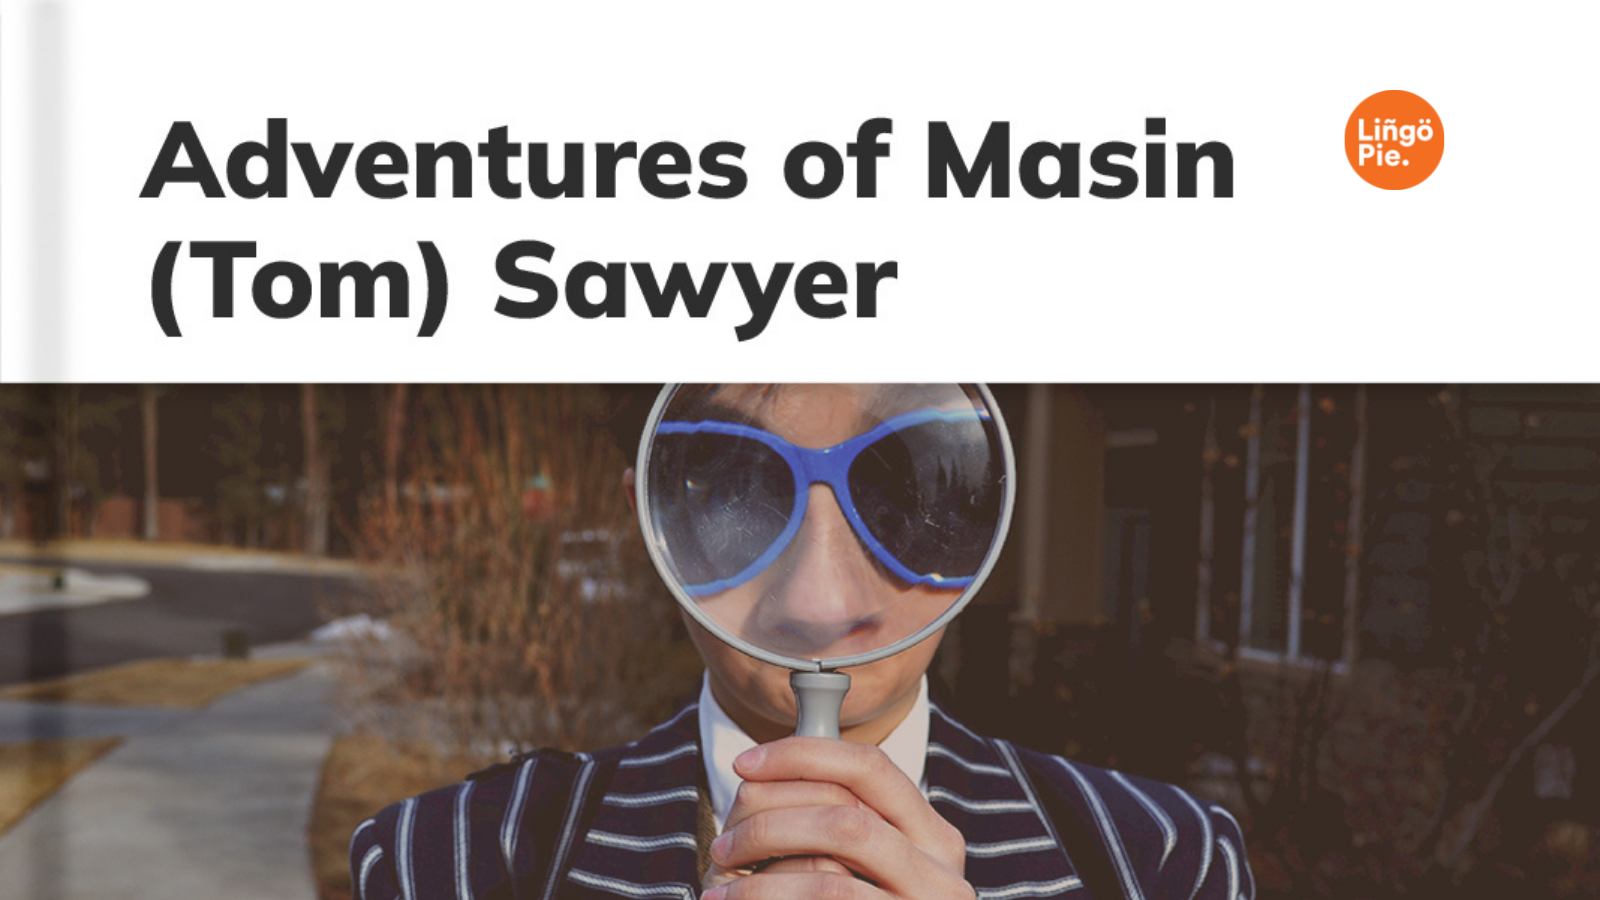 Adventures of Masin (Tom) Sawyer on Lingopie.